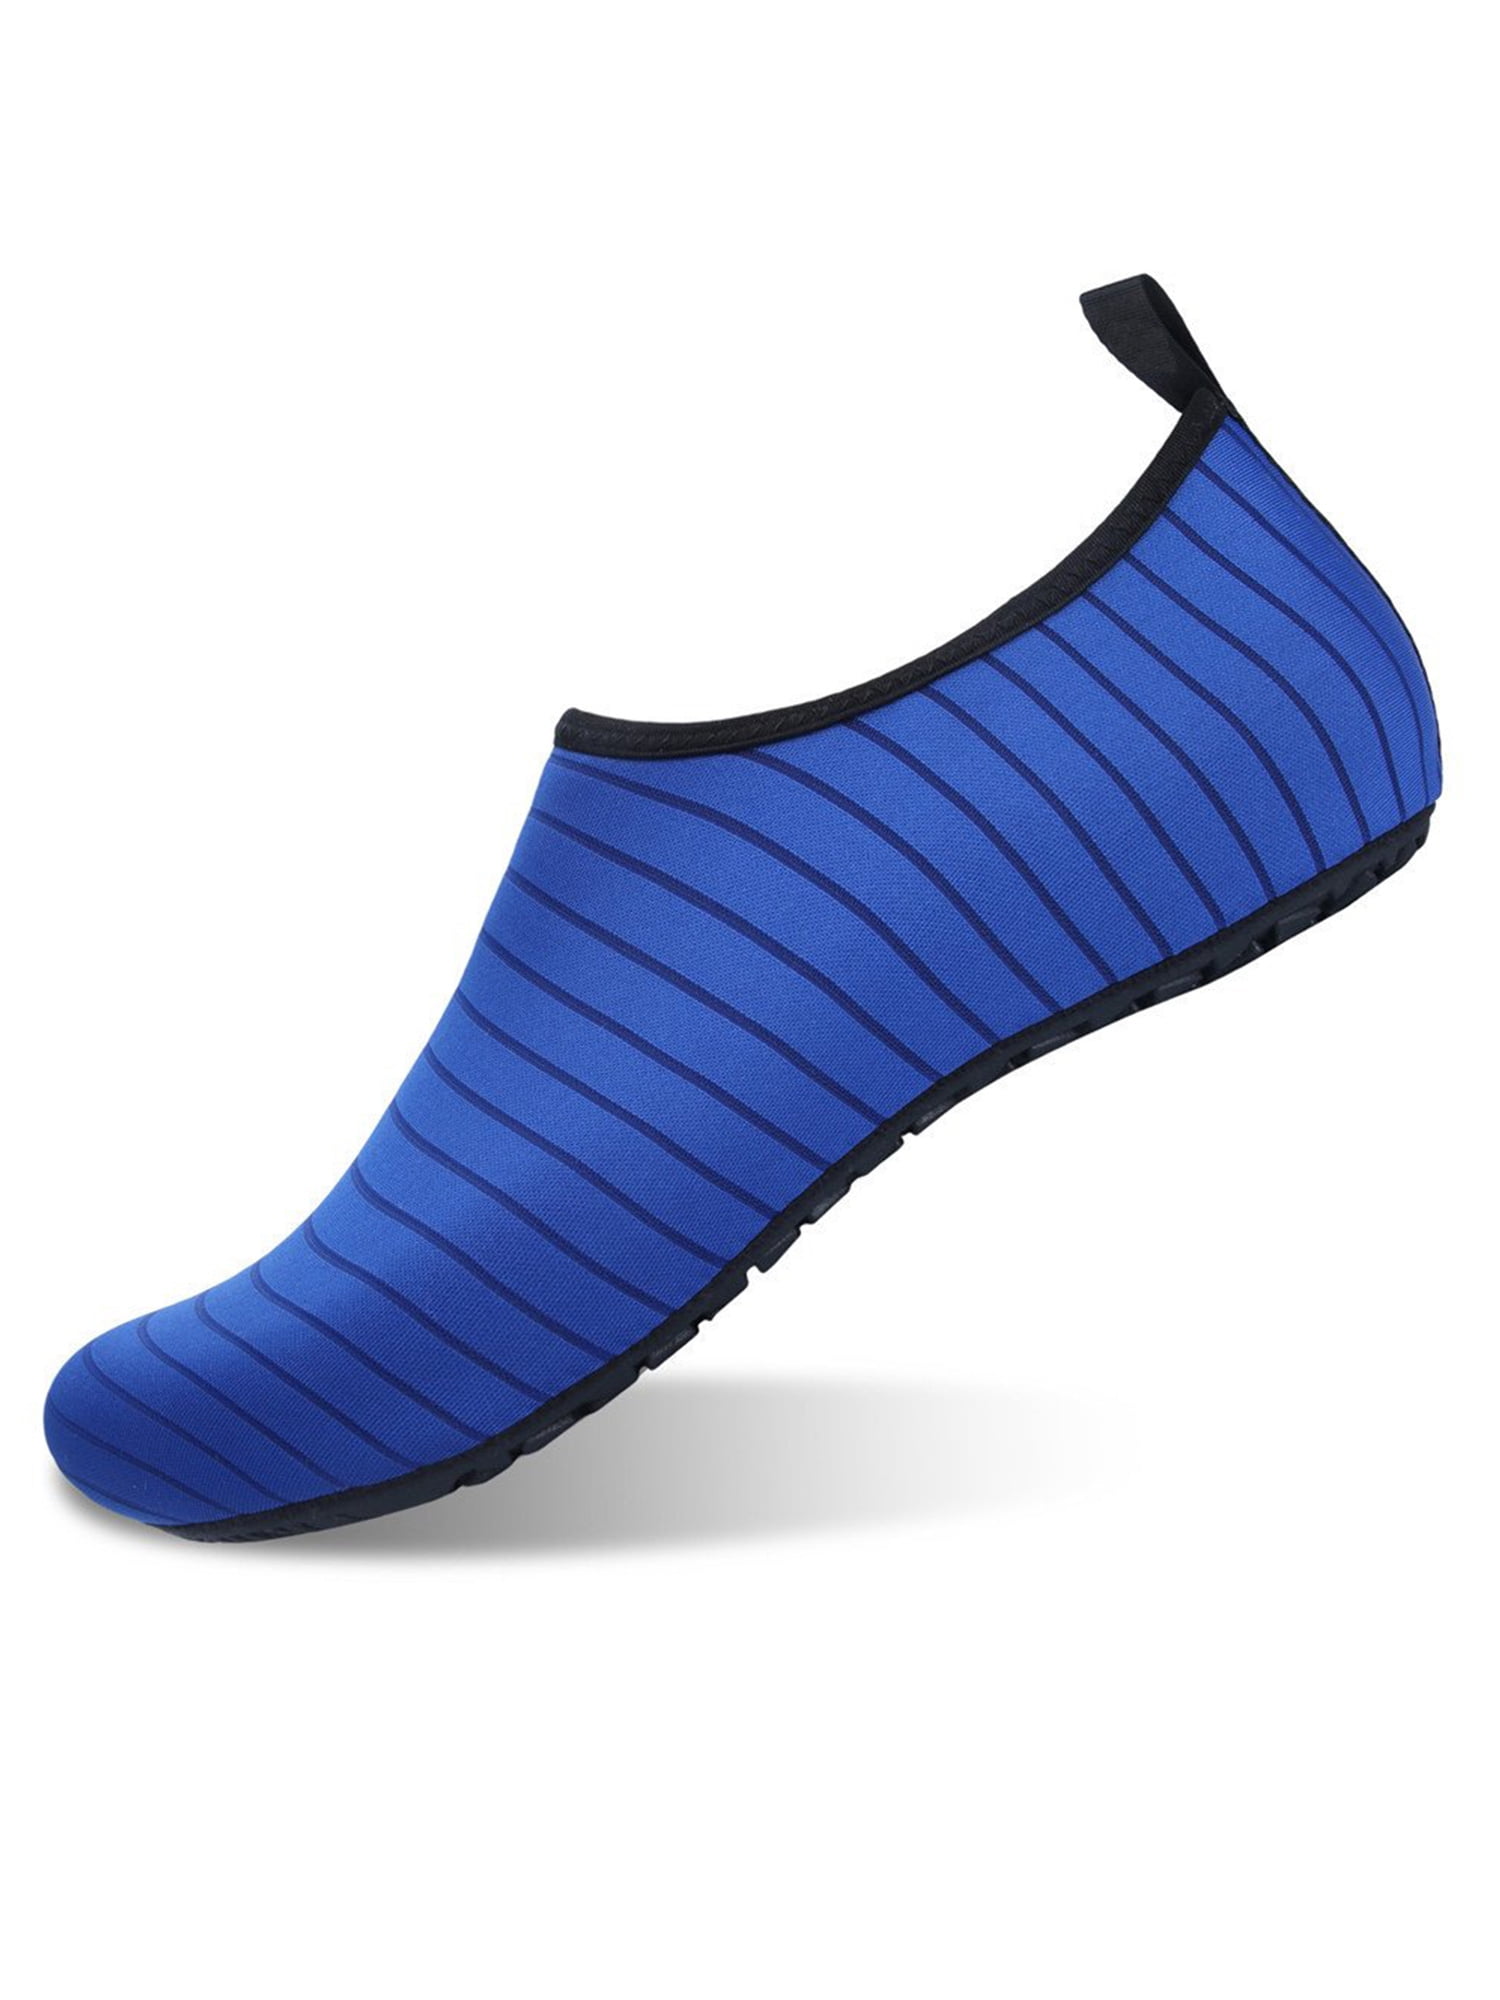 Details about   Womens Aqua Water Shoes Swim Surf Yoga Sports Beach Exercise Skin Socks 2021 